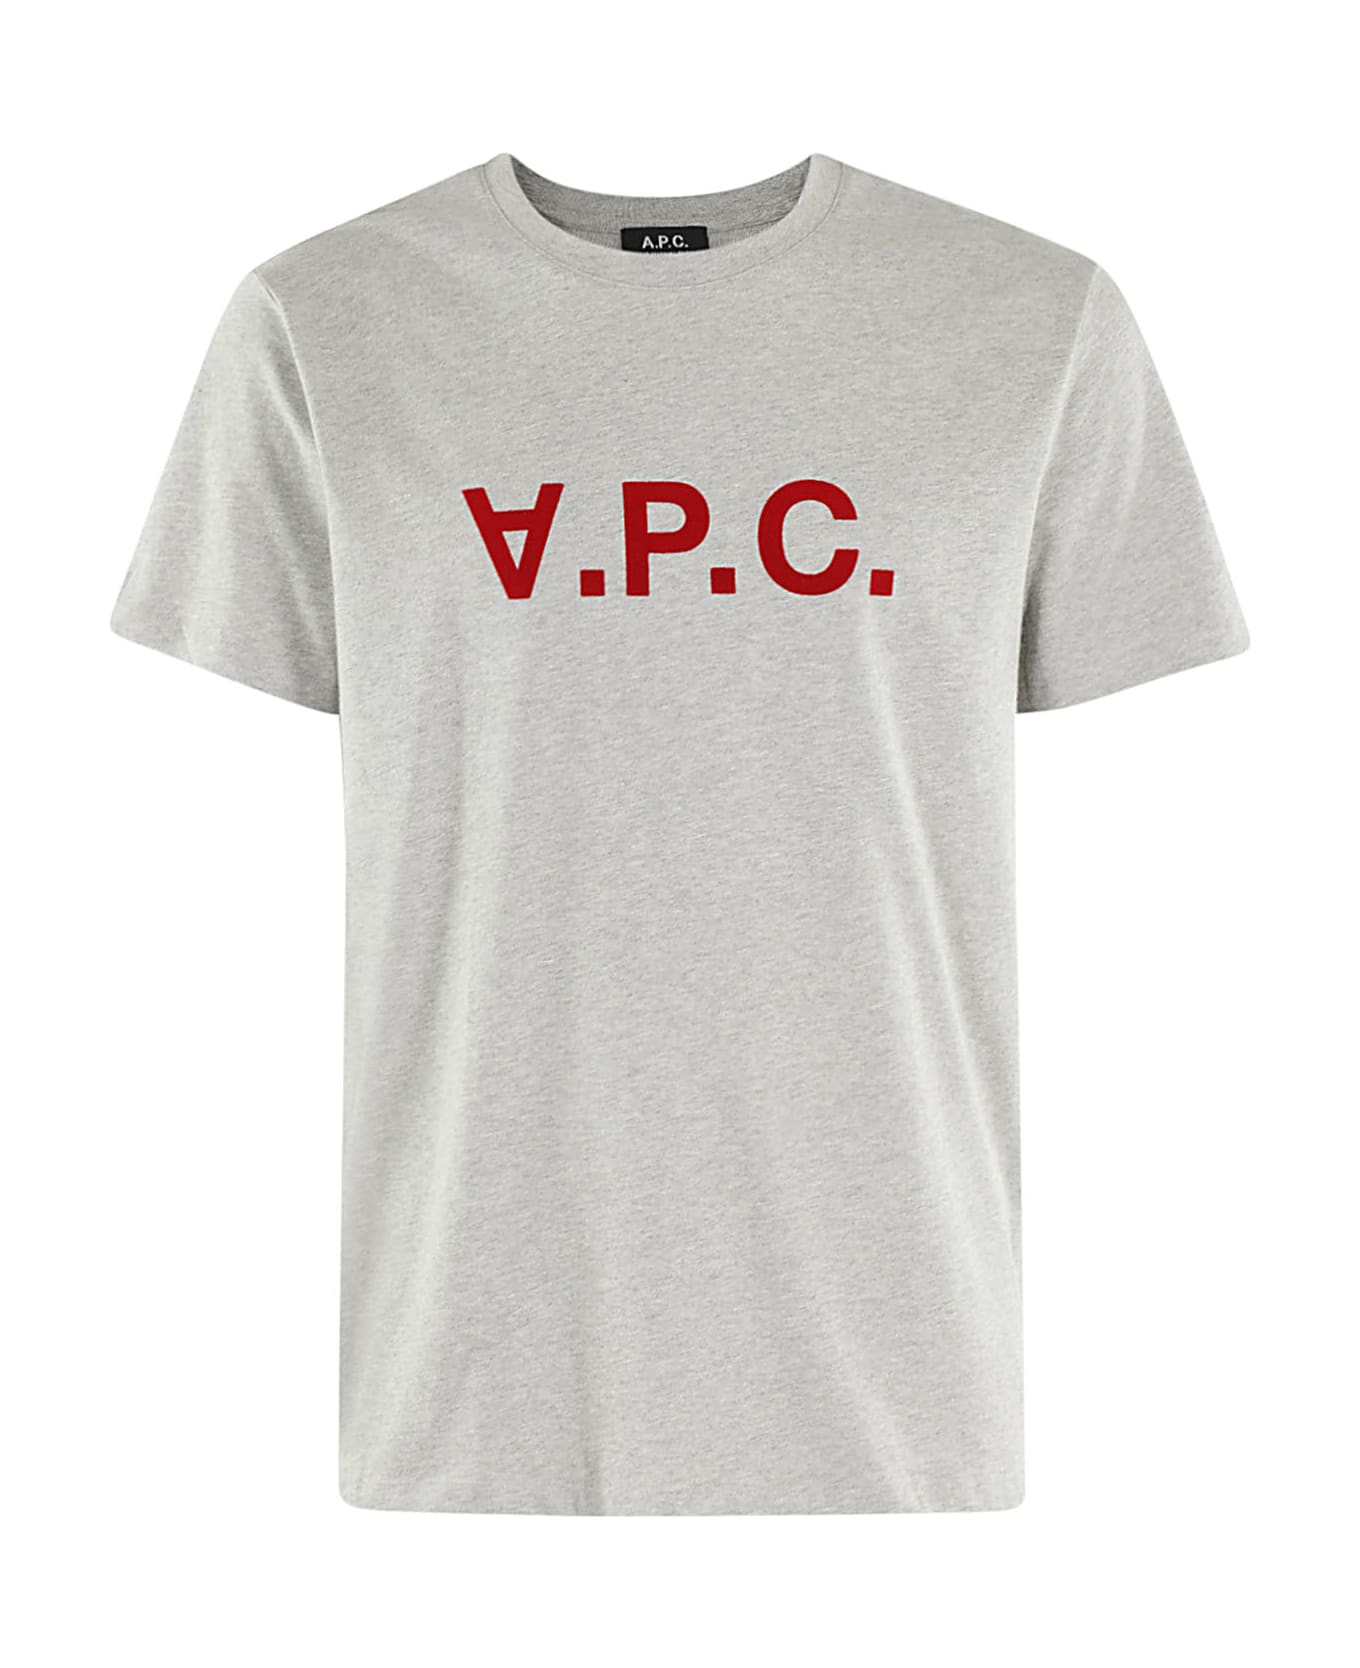 A.P.C. T-shirt - Tph Gris Clar Chine Rouge シャツ